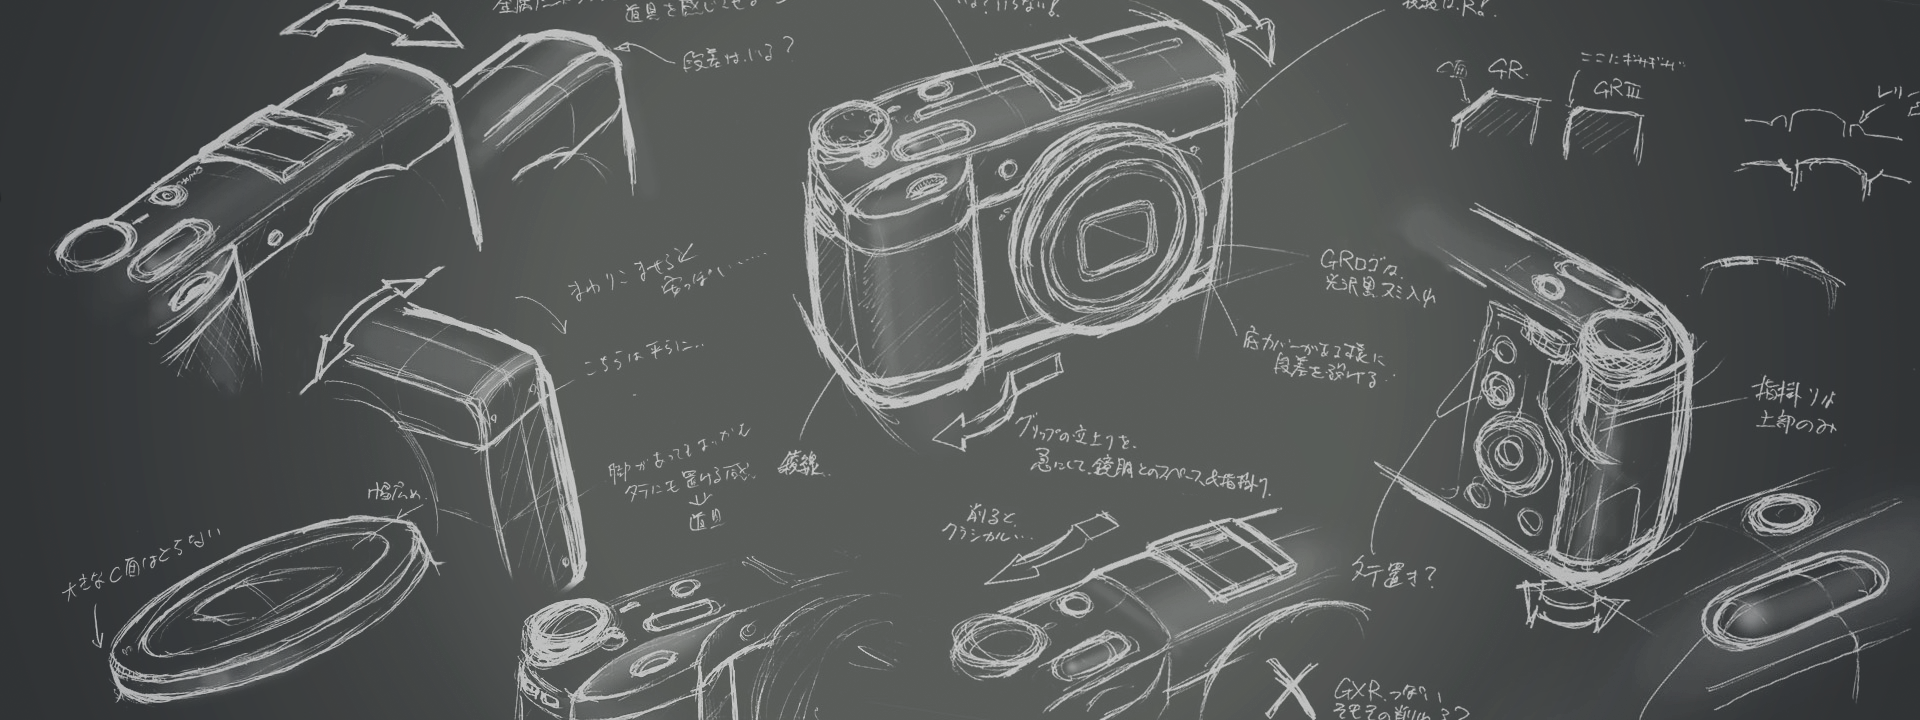 camera design